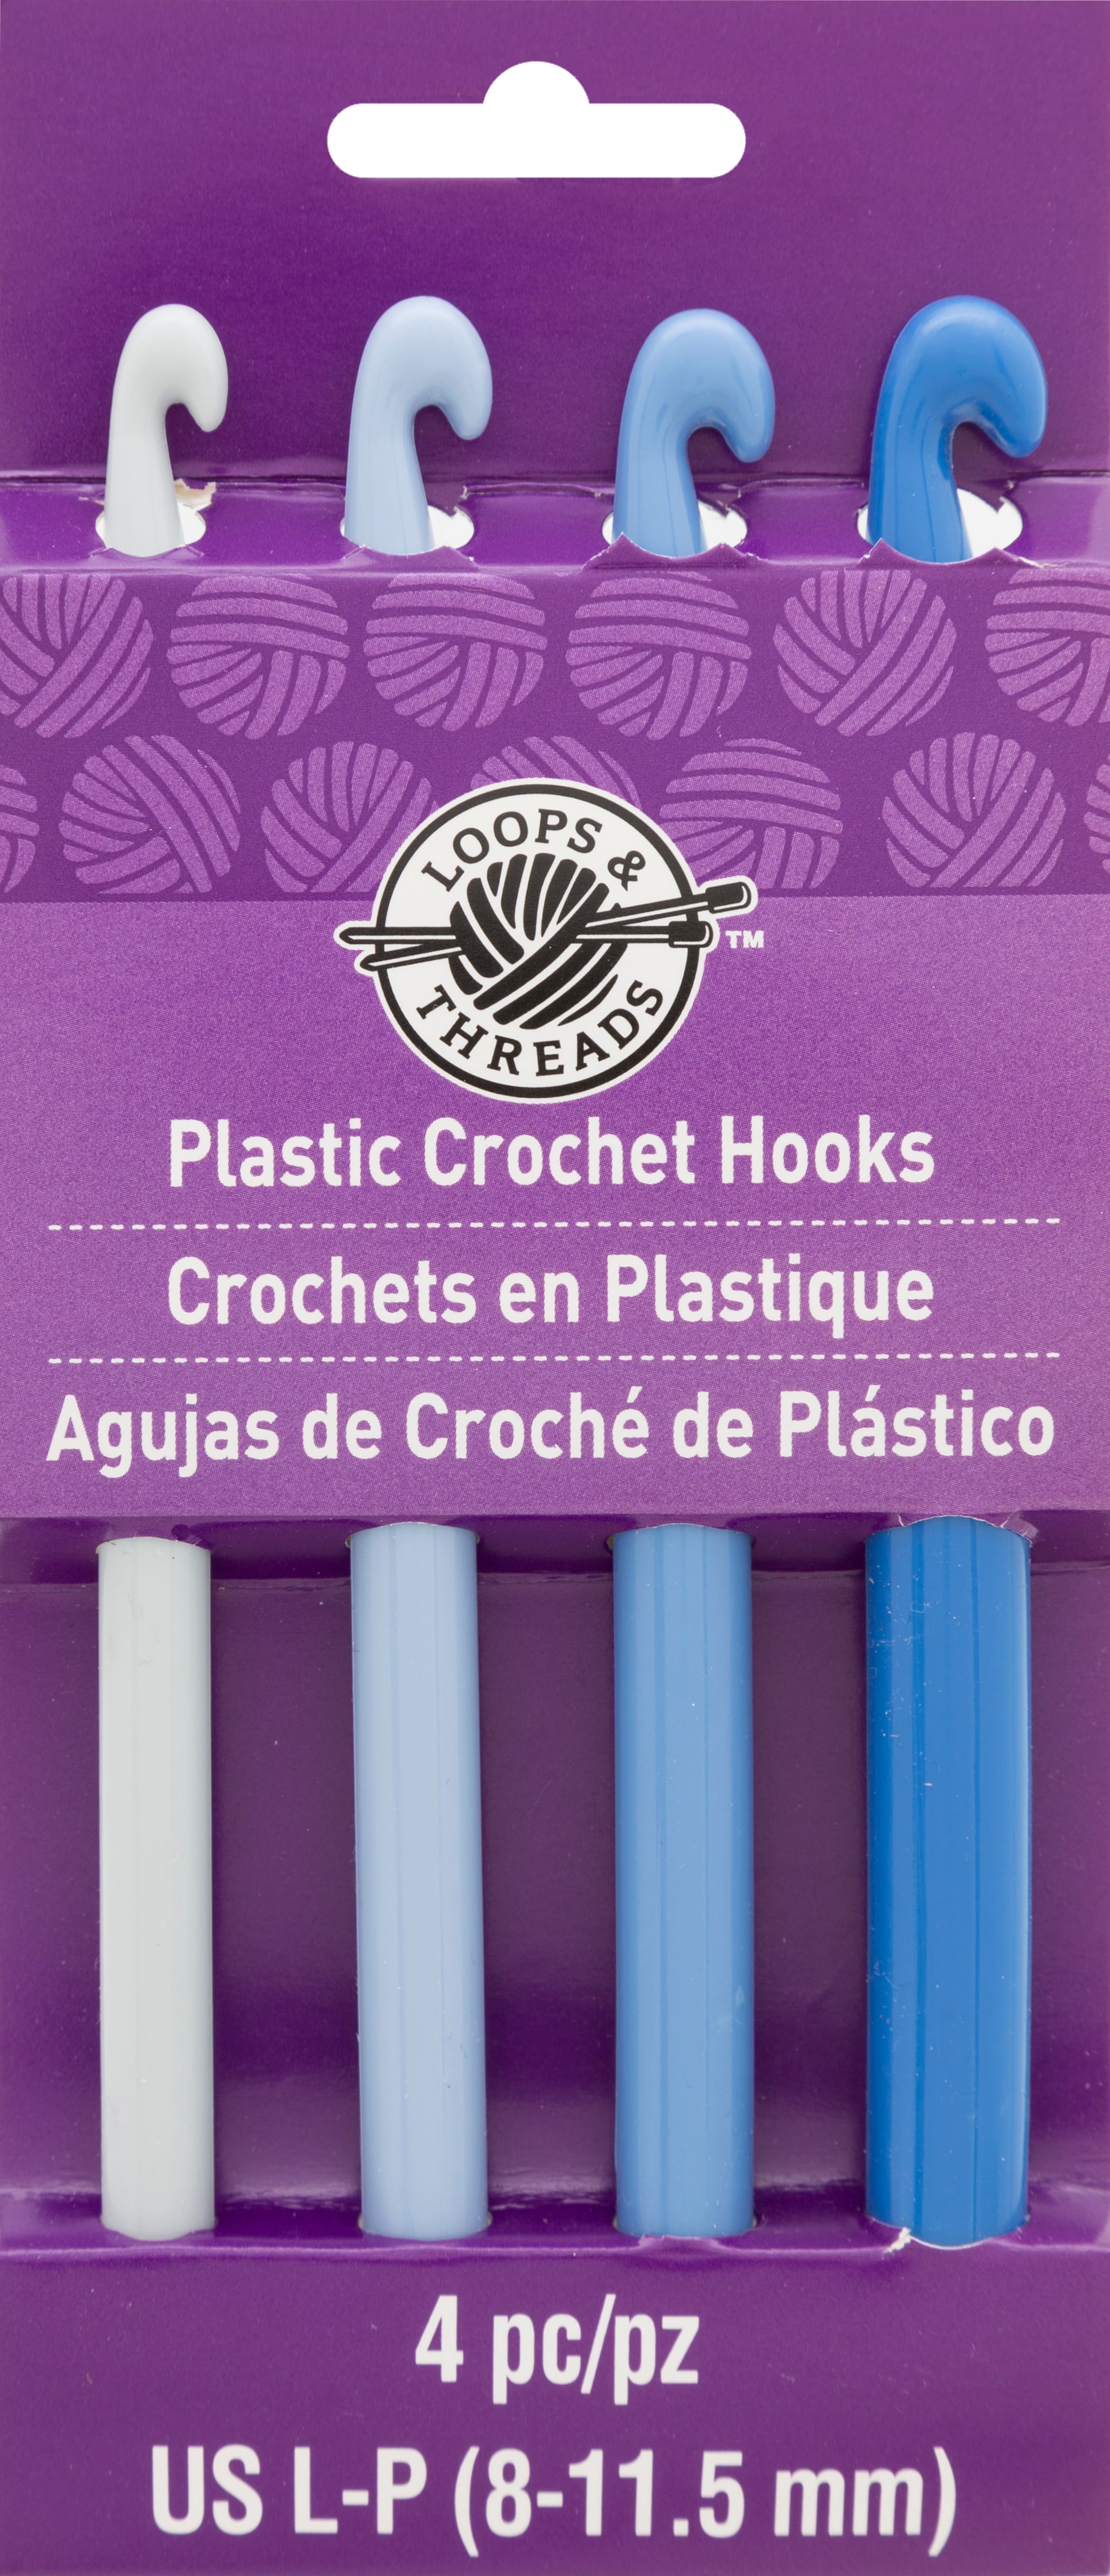 Plastic Crochet Hook Set by Loops &#x26; Threads&#xAE;, L-P